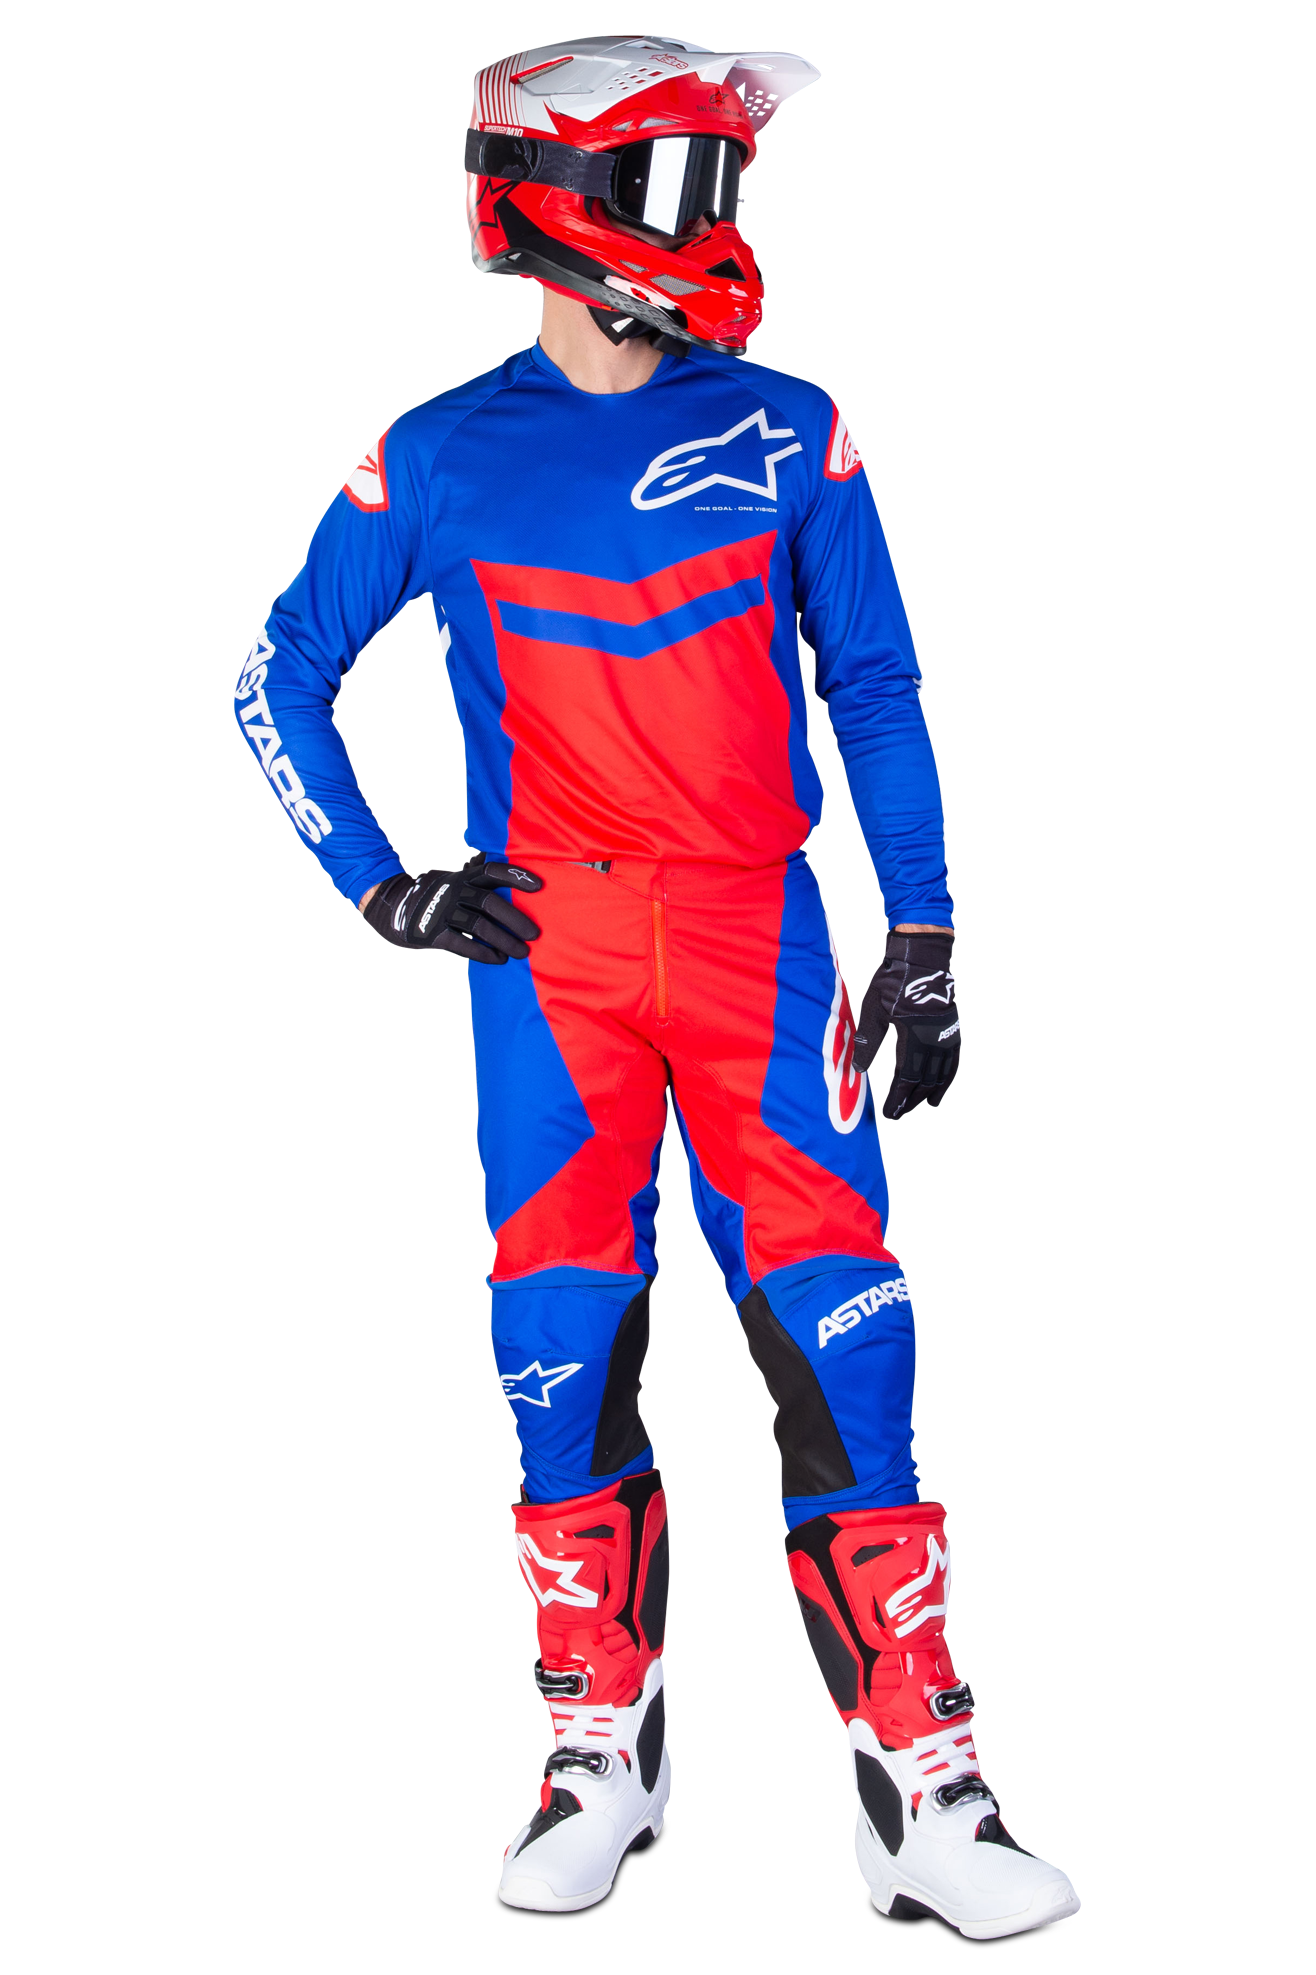 2021 Alpinestars FLUID SPEED Blue Bright Red Motocross MX Race Kit Gear Adults